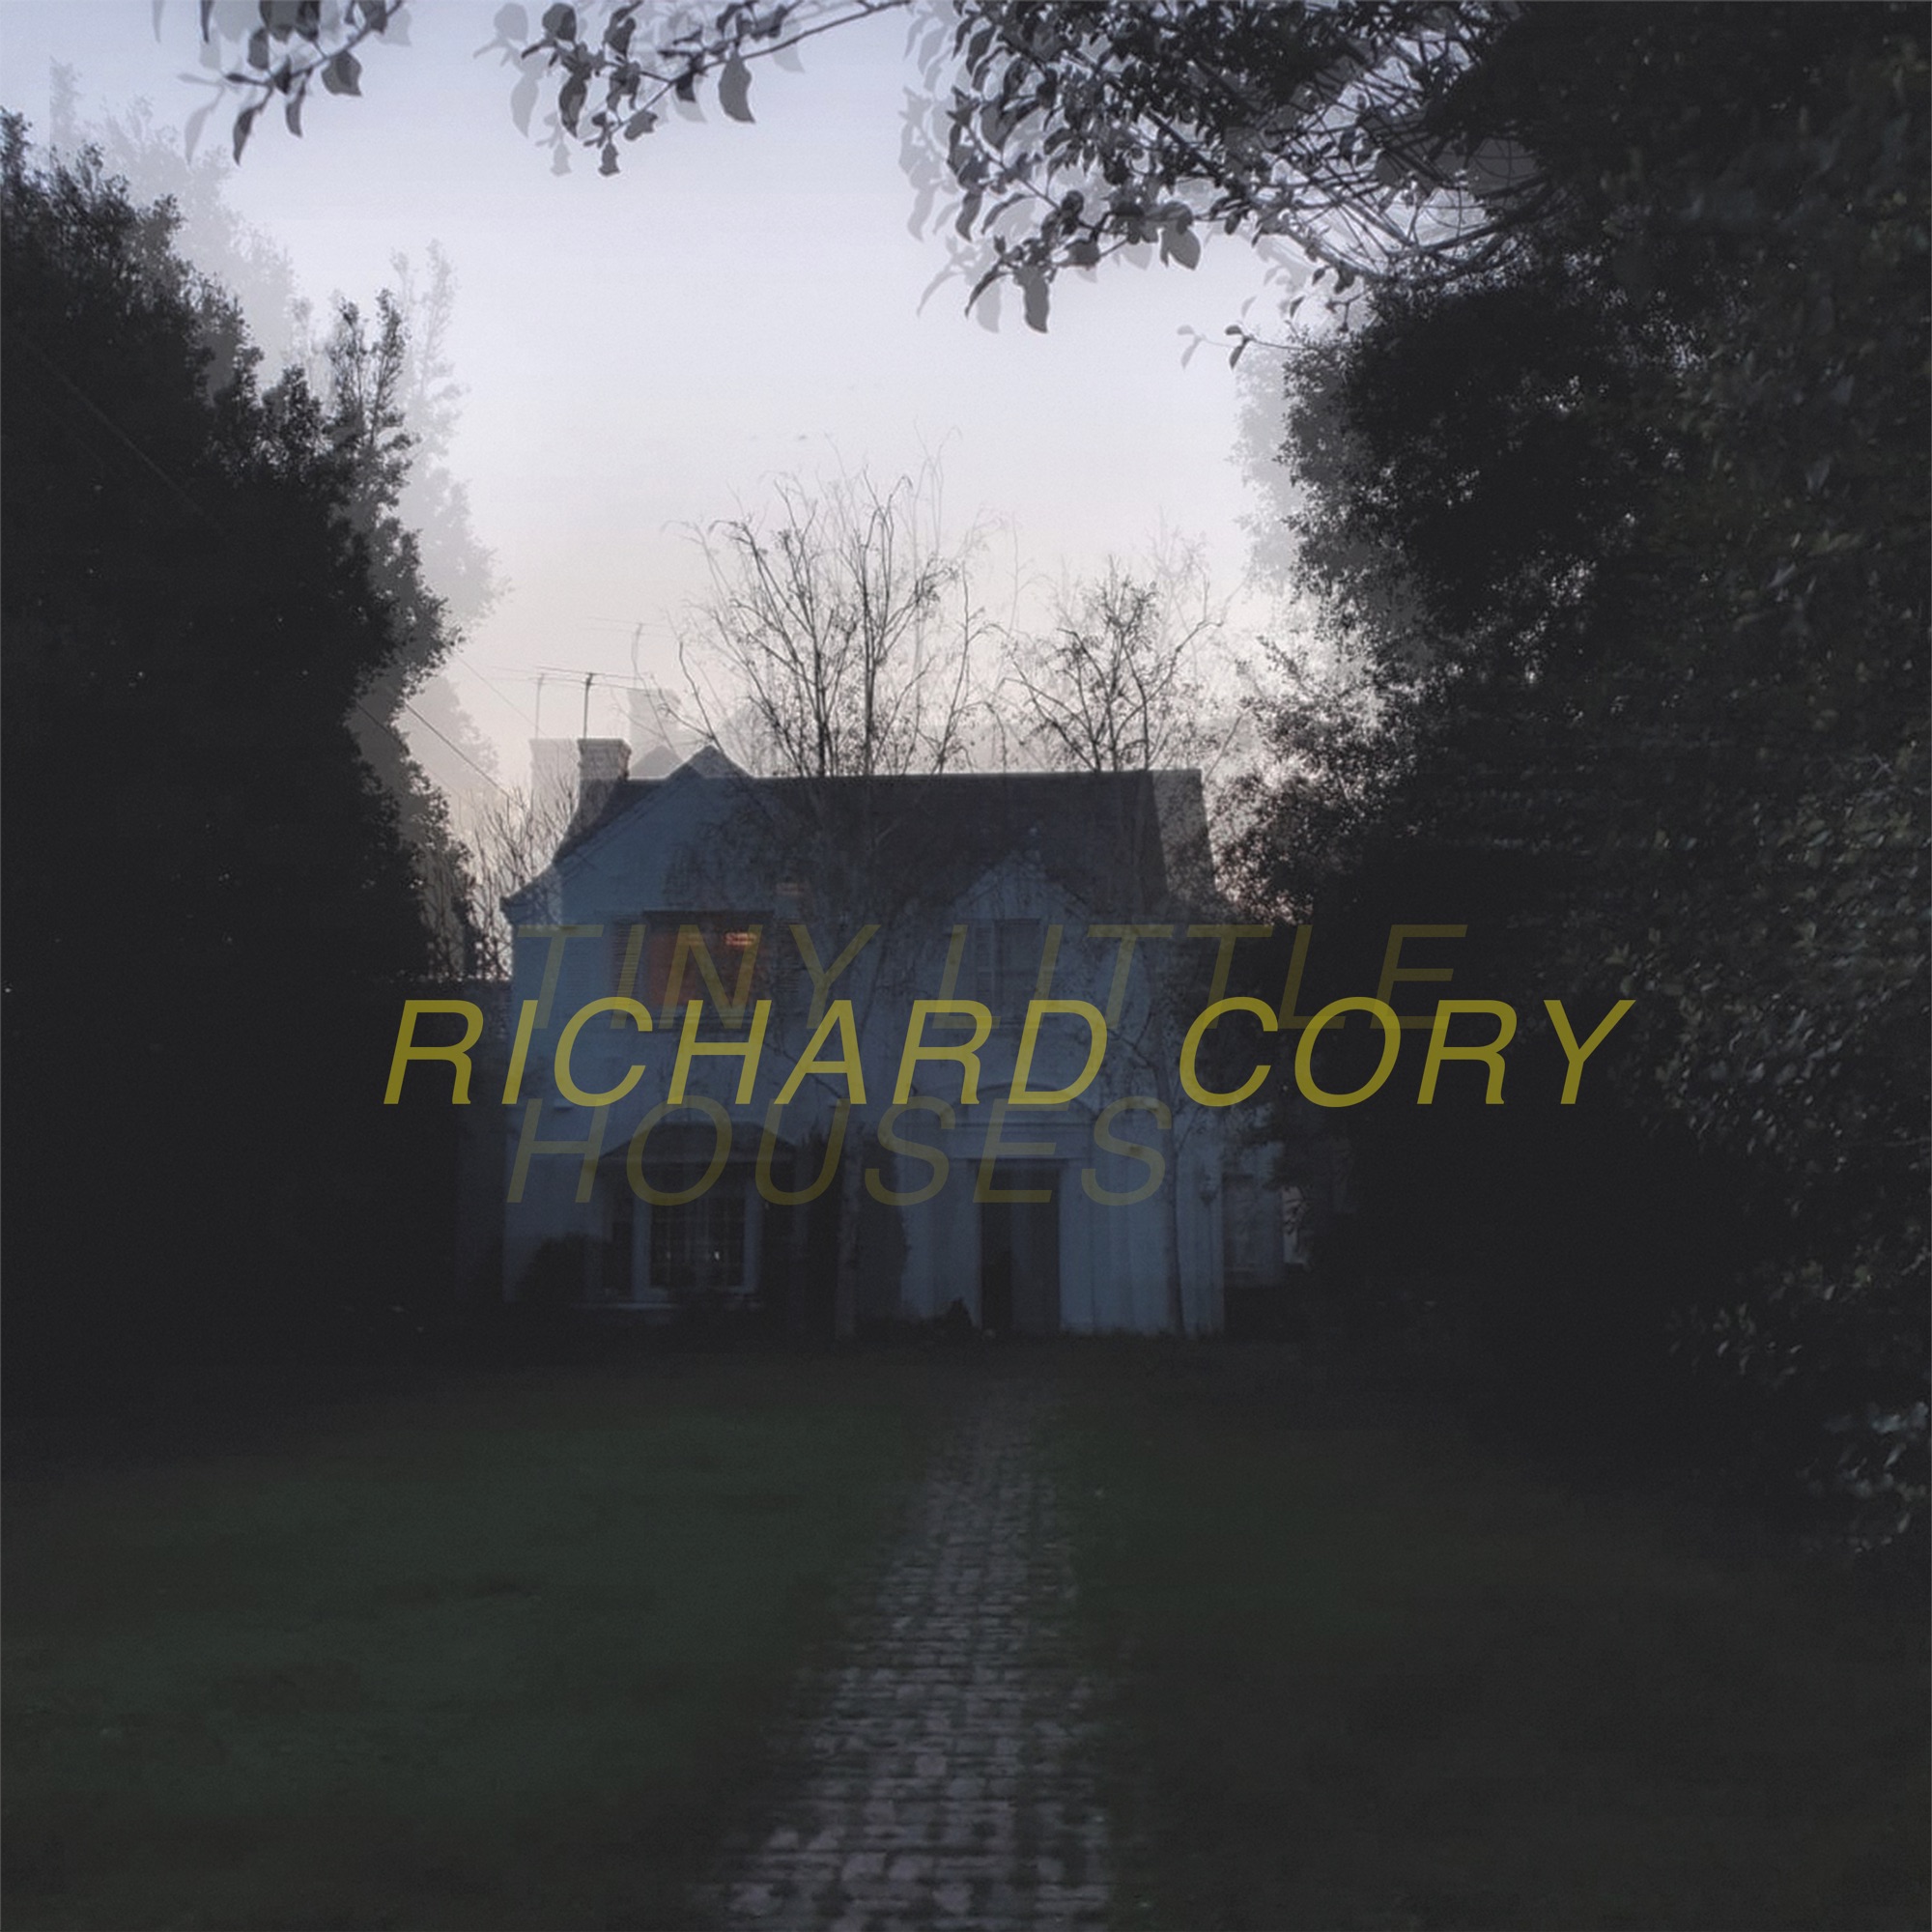 Tiny Little Houses - Richard Cory - Single